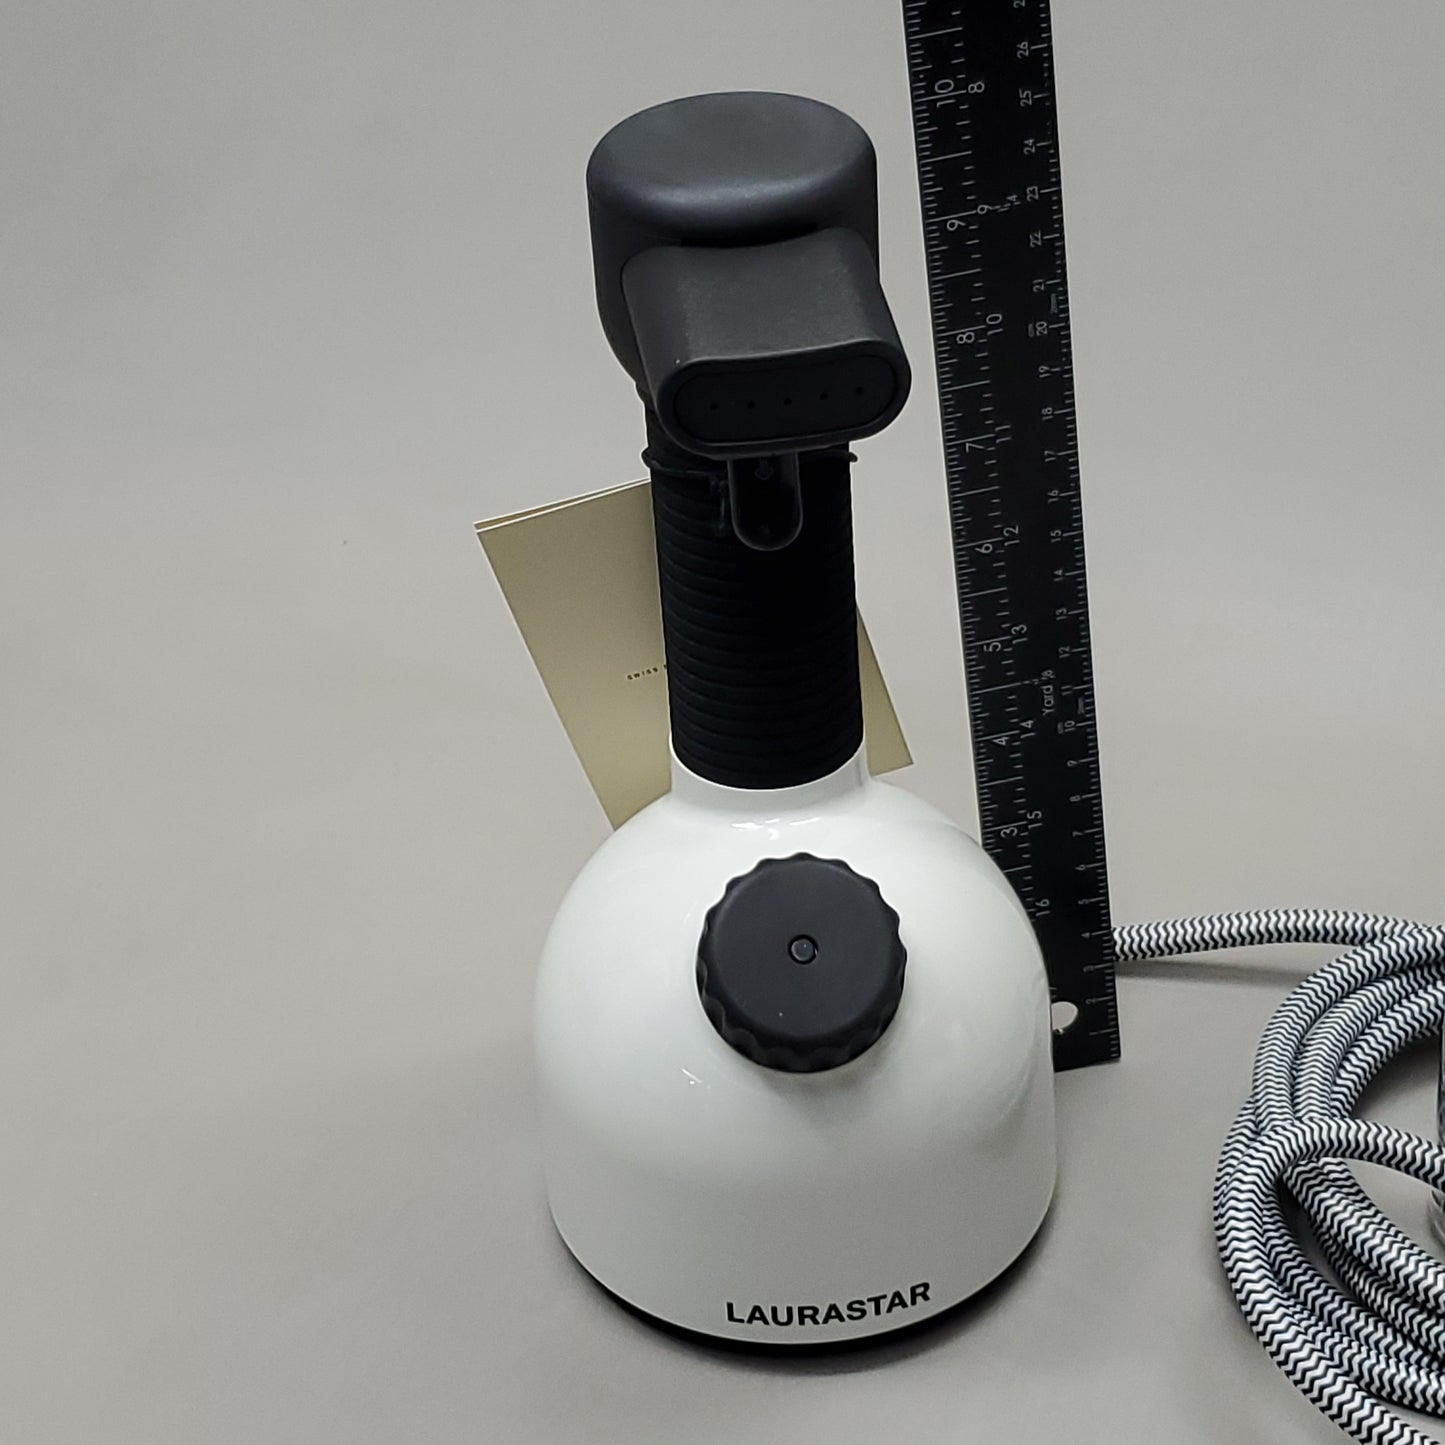 LAURASTAR IGGI Hygienic Compact Handheld Garment Steamer Swiss Design White E519568 (New)